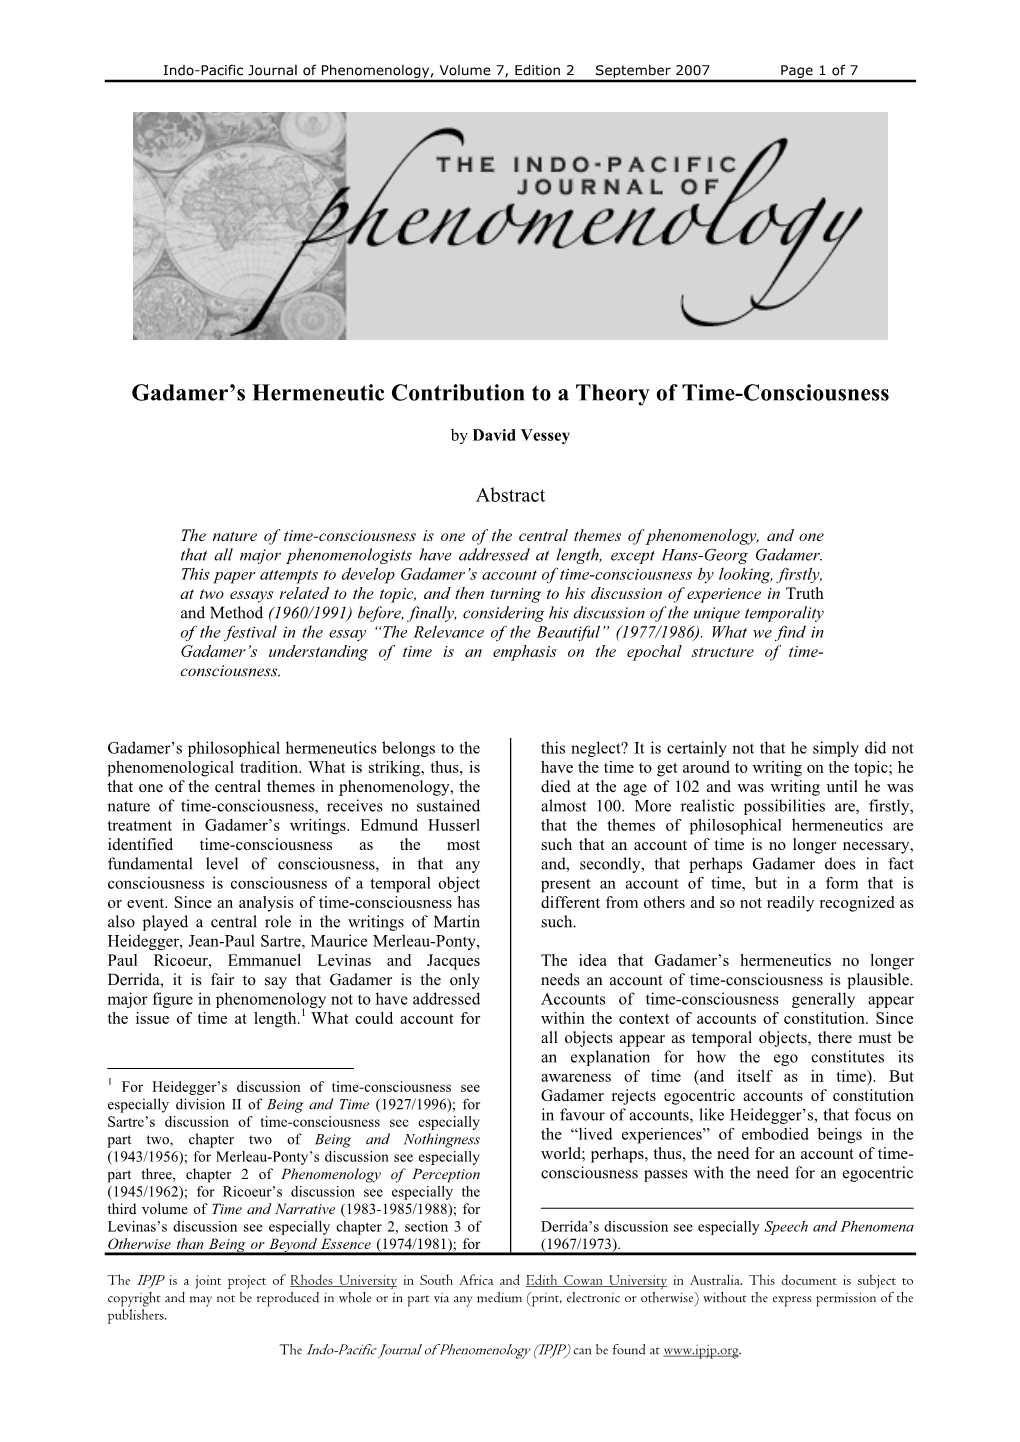 Gadamer's Hermeneutic Contribution to a Theory of Time-Consciousness